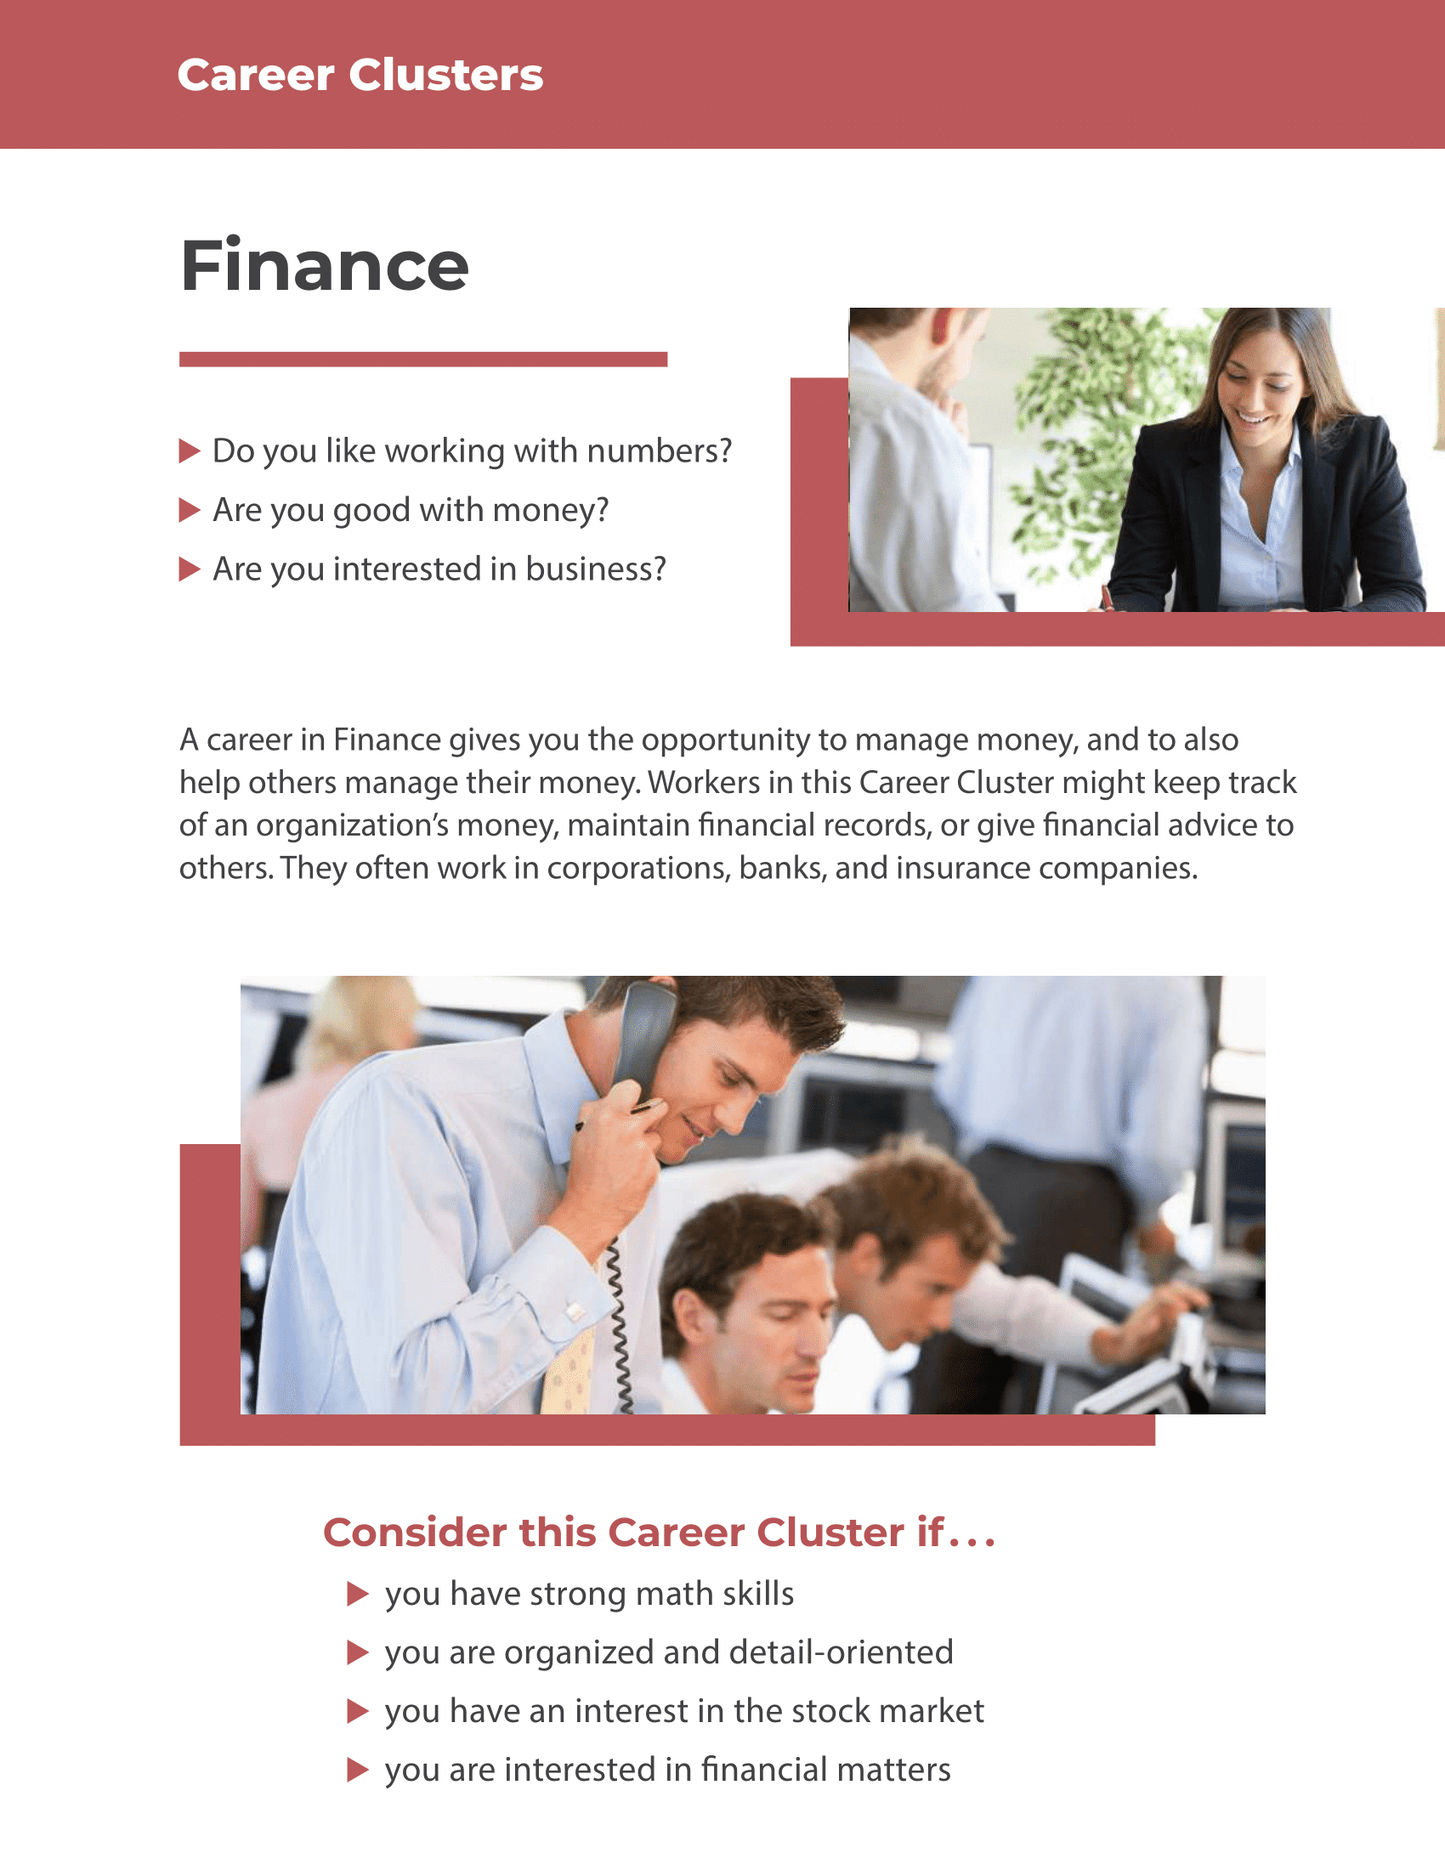 Career Clusters - Finance